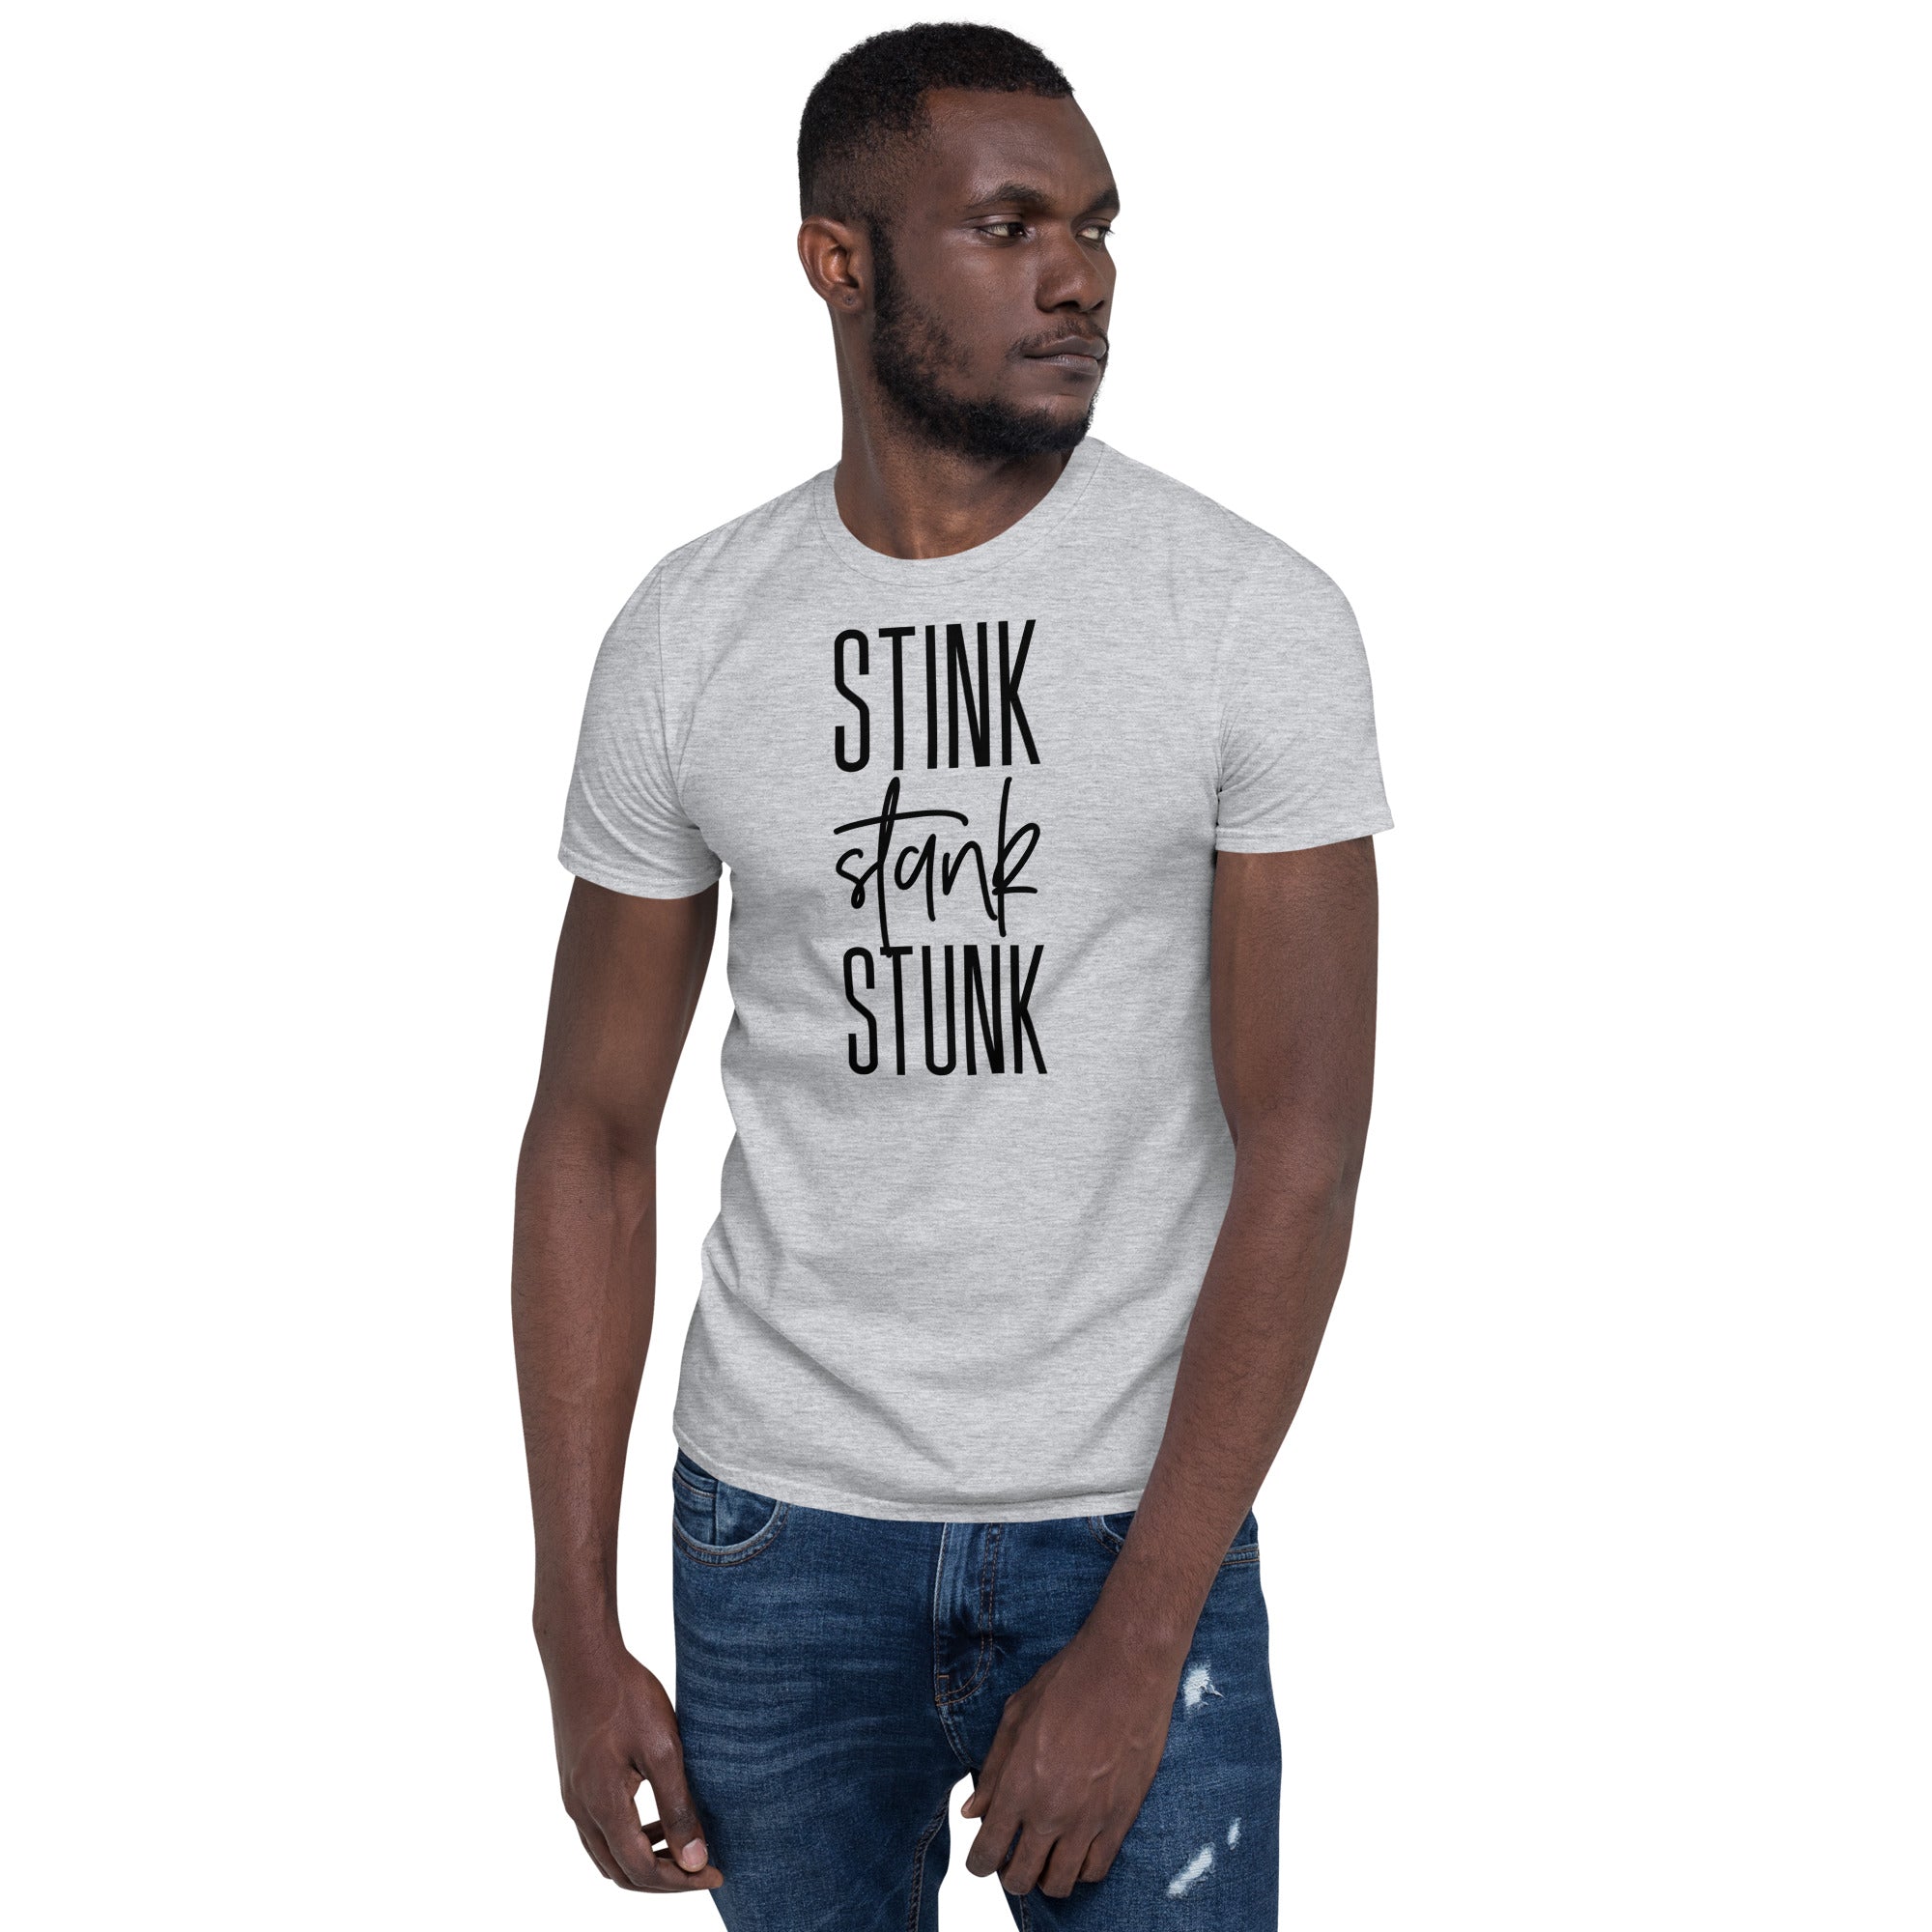 Stink Stank Stunk - Short-Sleeve Unisex T-Shirt